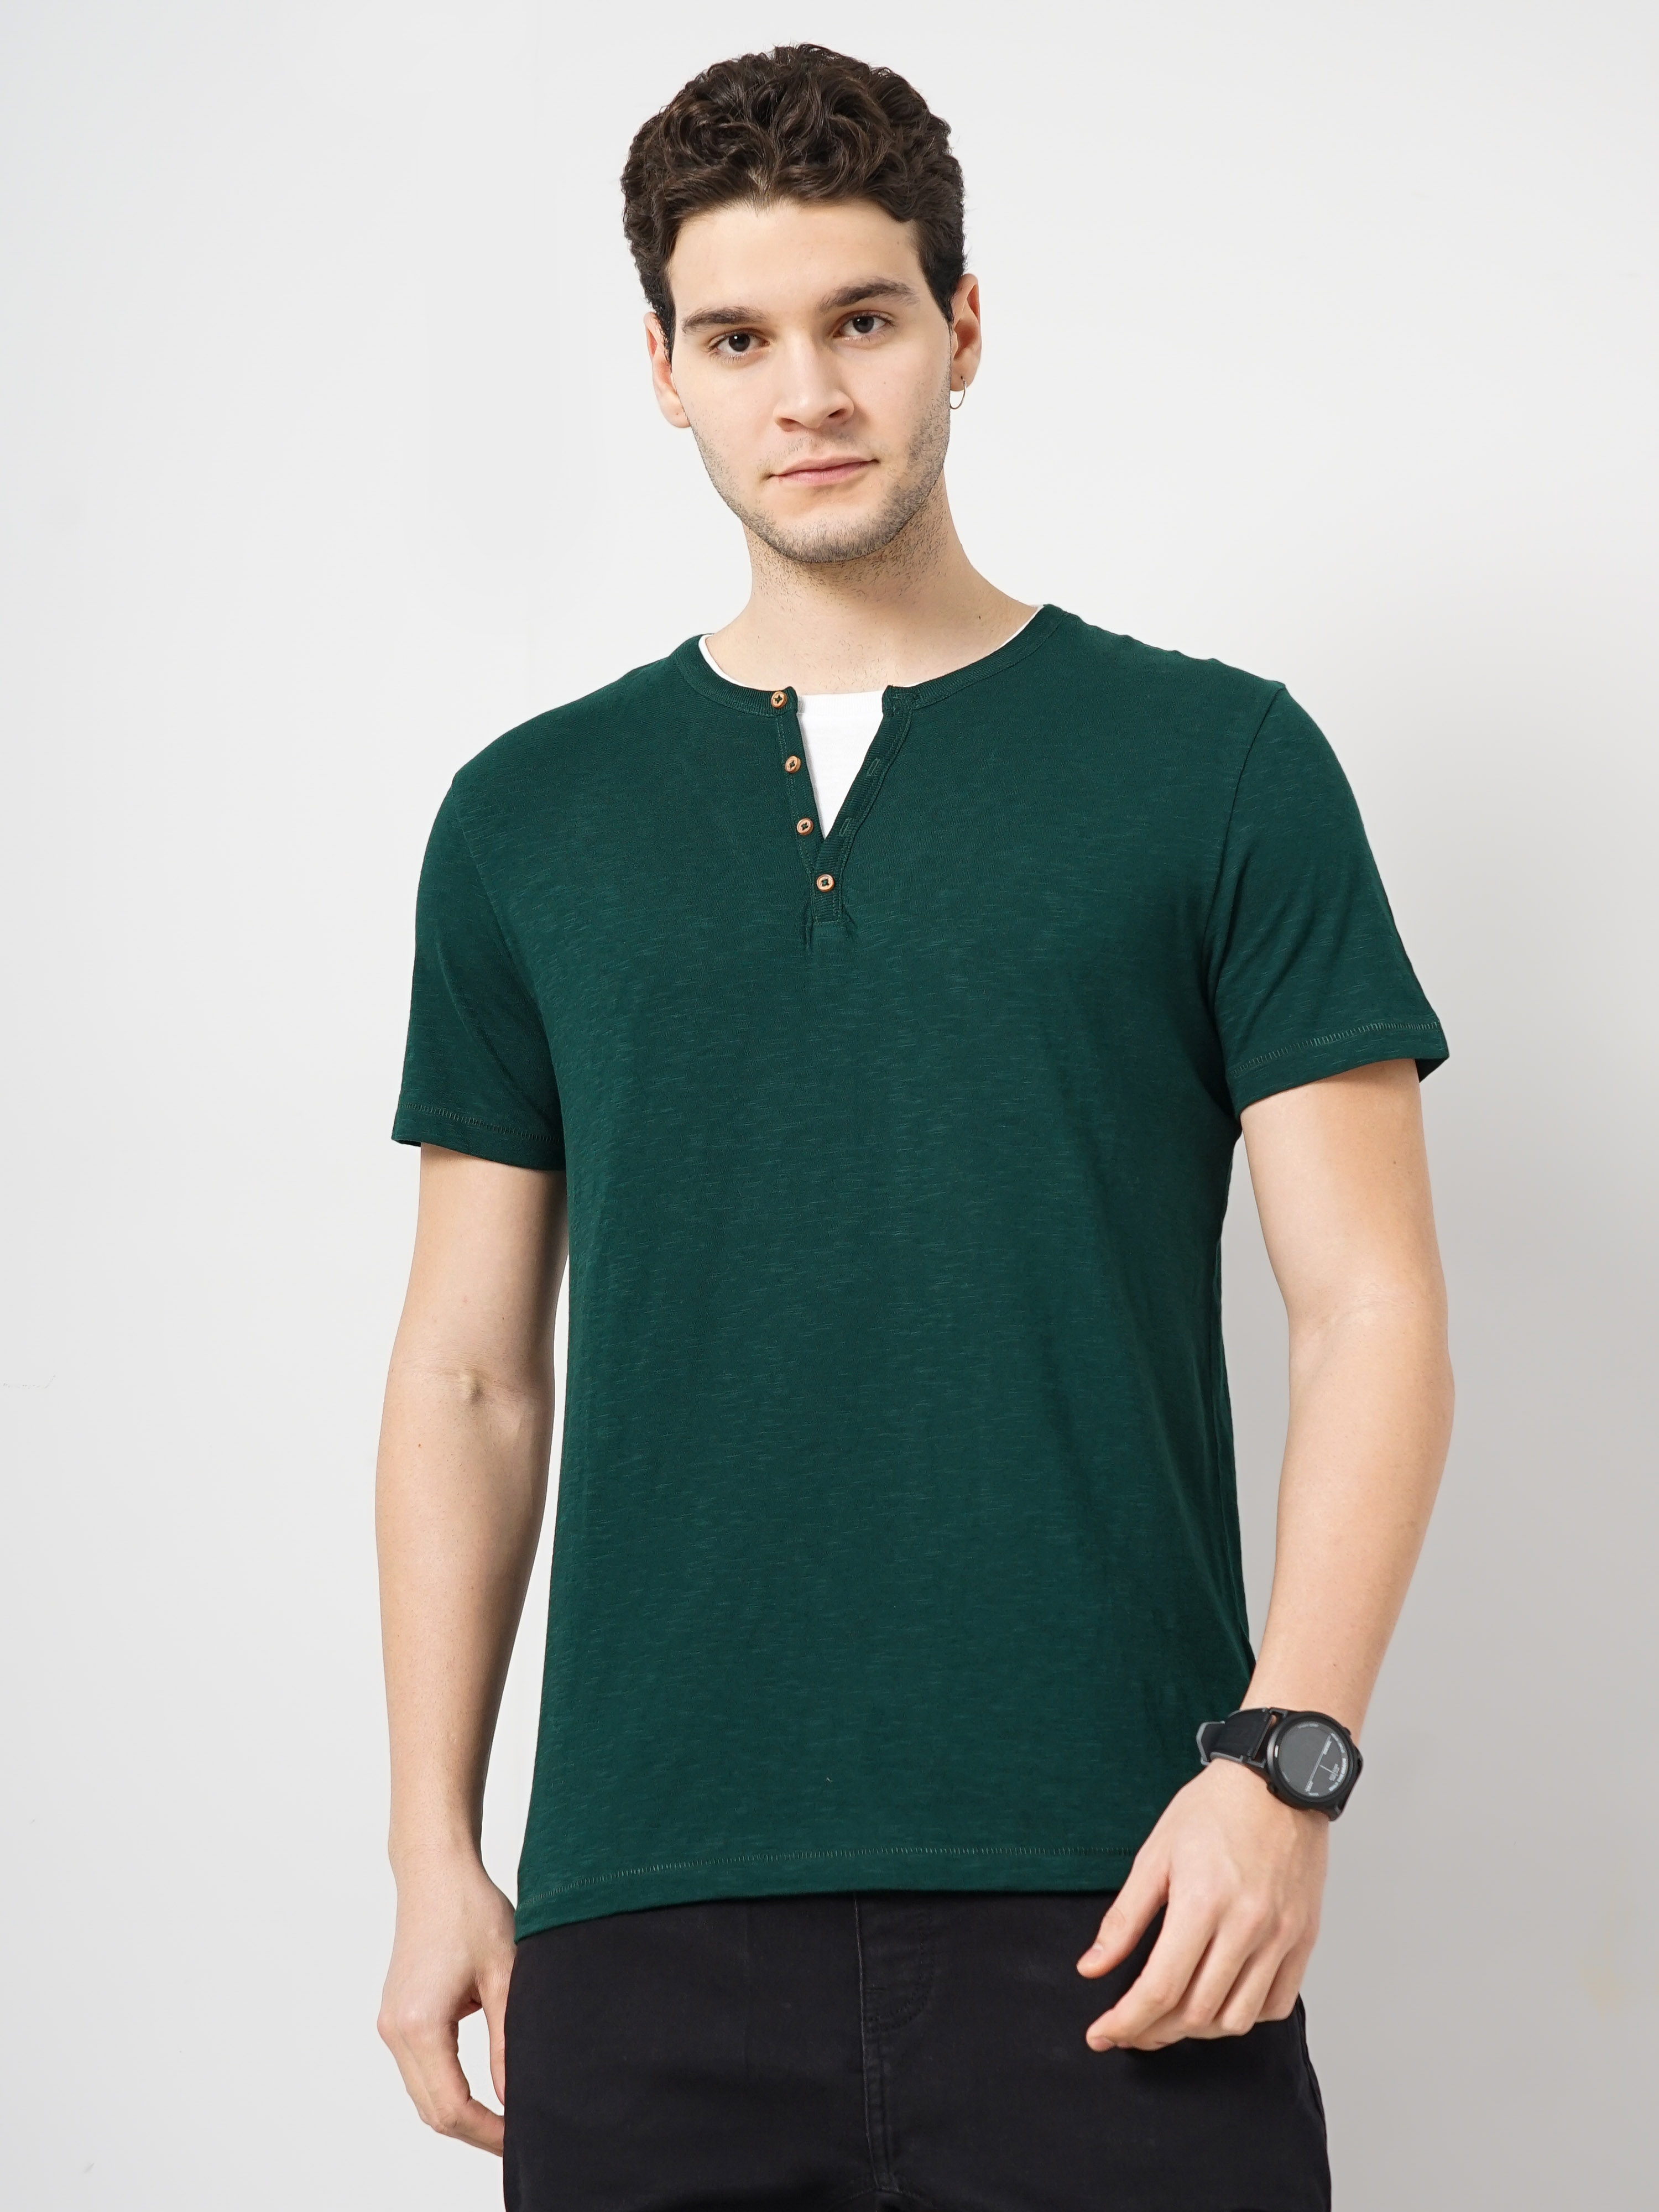 Celio Men Green Solid Regular Fit Fashion Cotton Slub Tshirt